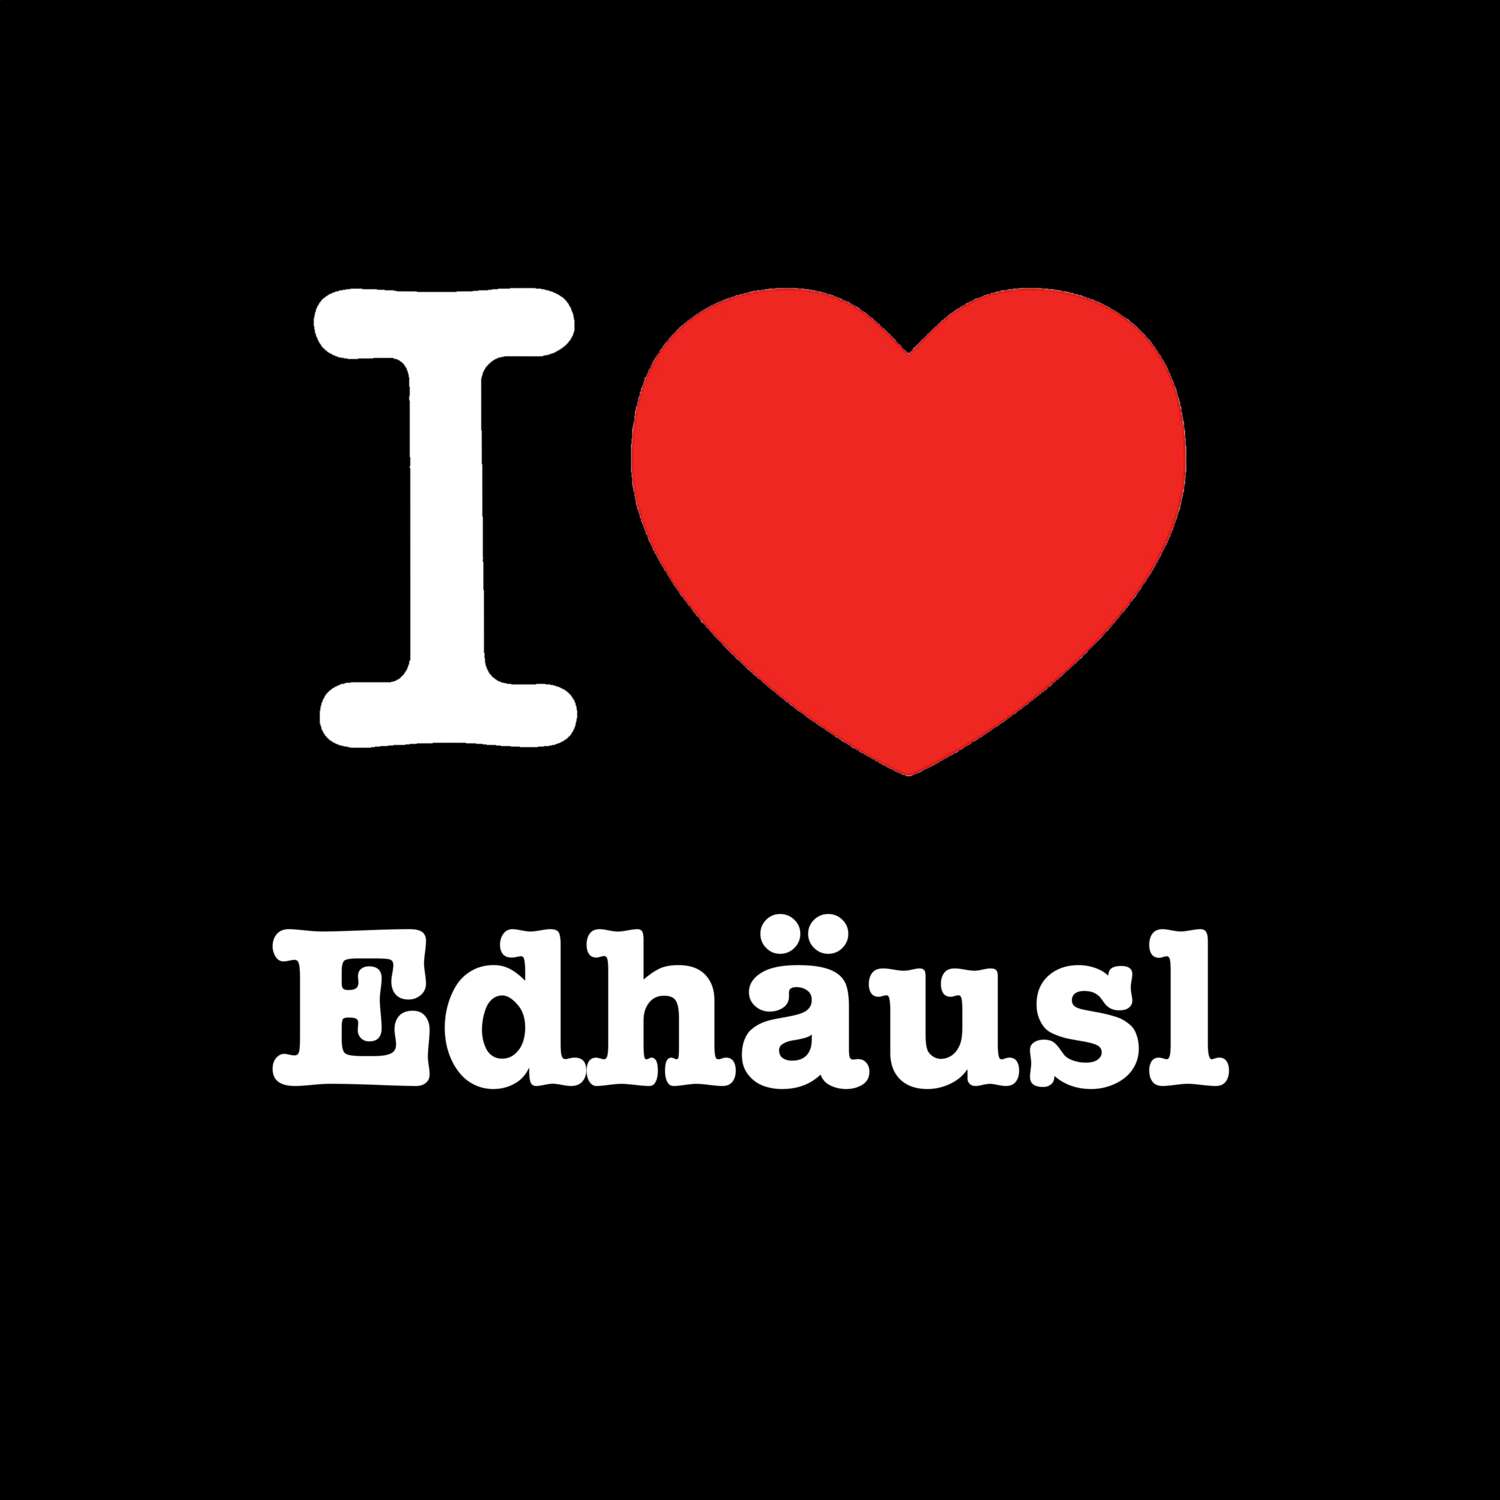 Edhäusl T-Shirt »I love«